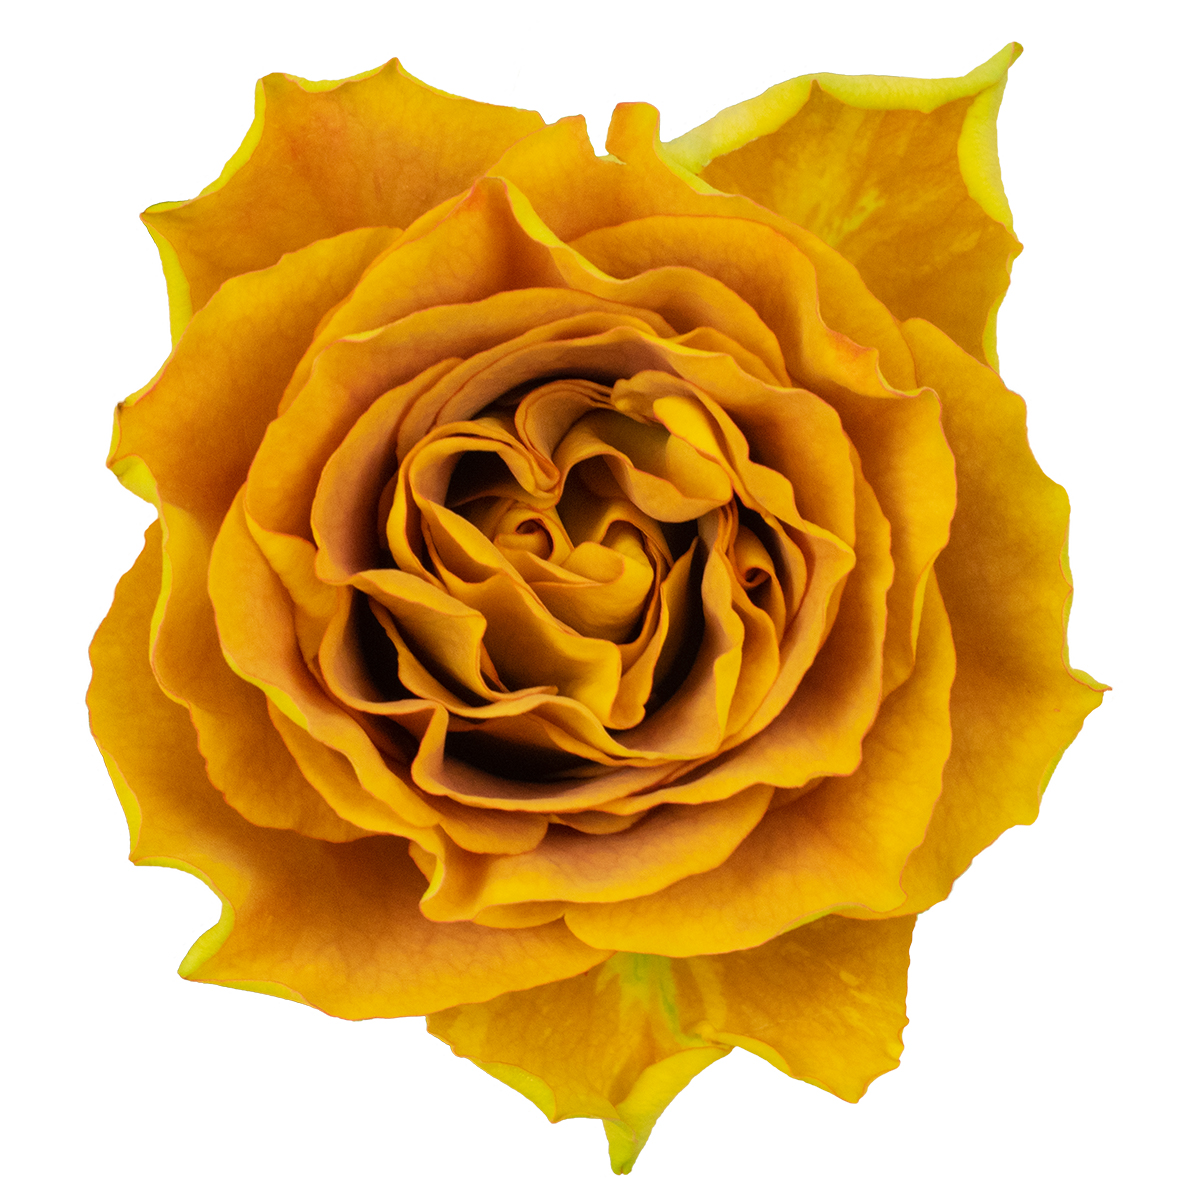 HEART OF GOLD rose - Florist Rose Paradise! - Decofresh TOTF2020 on Thursd